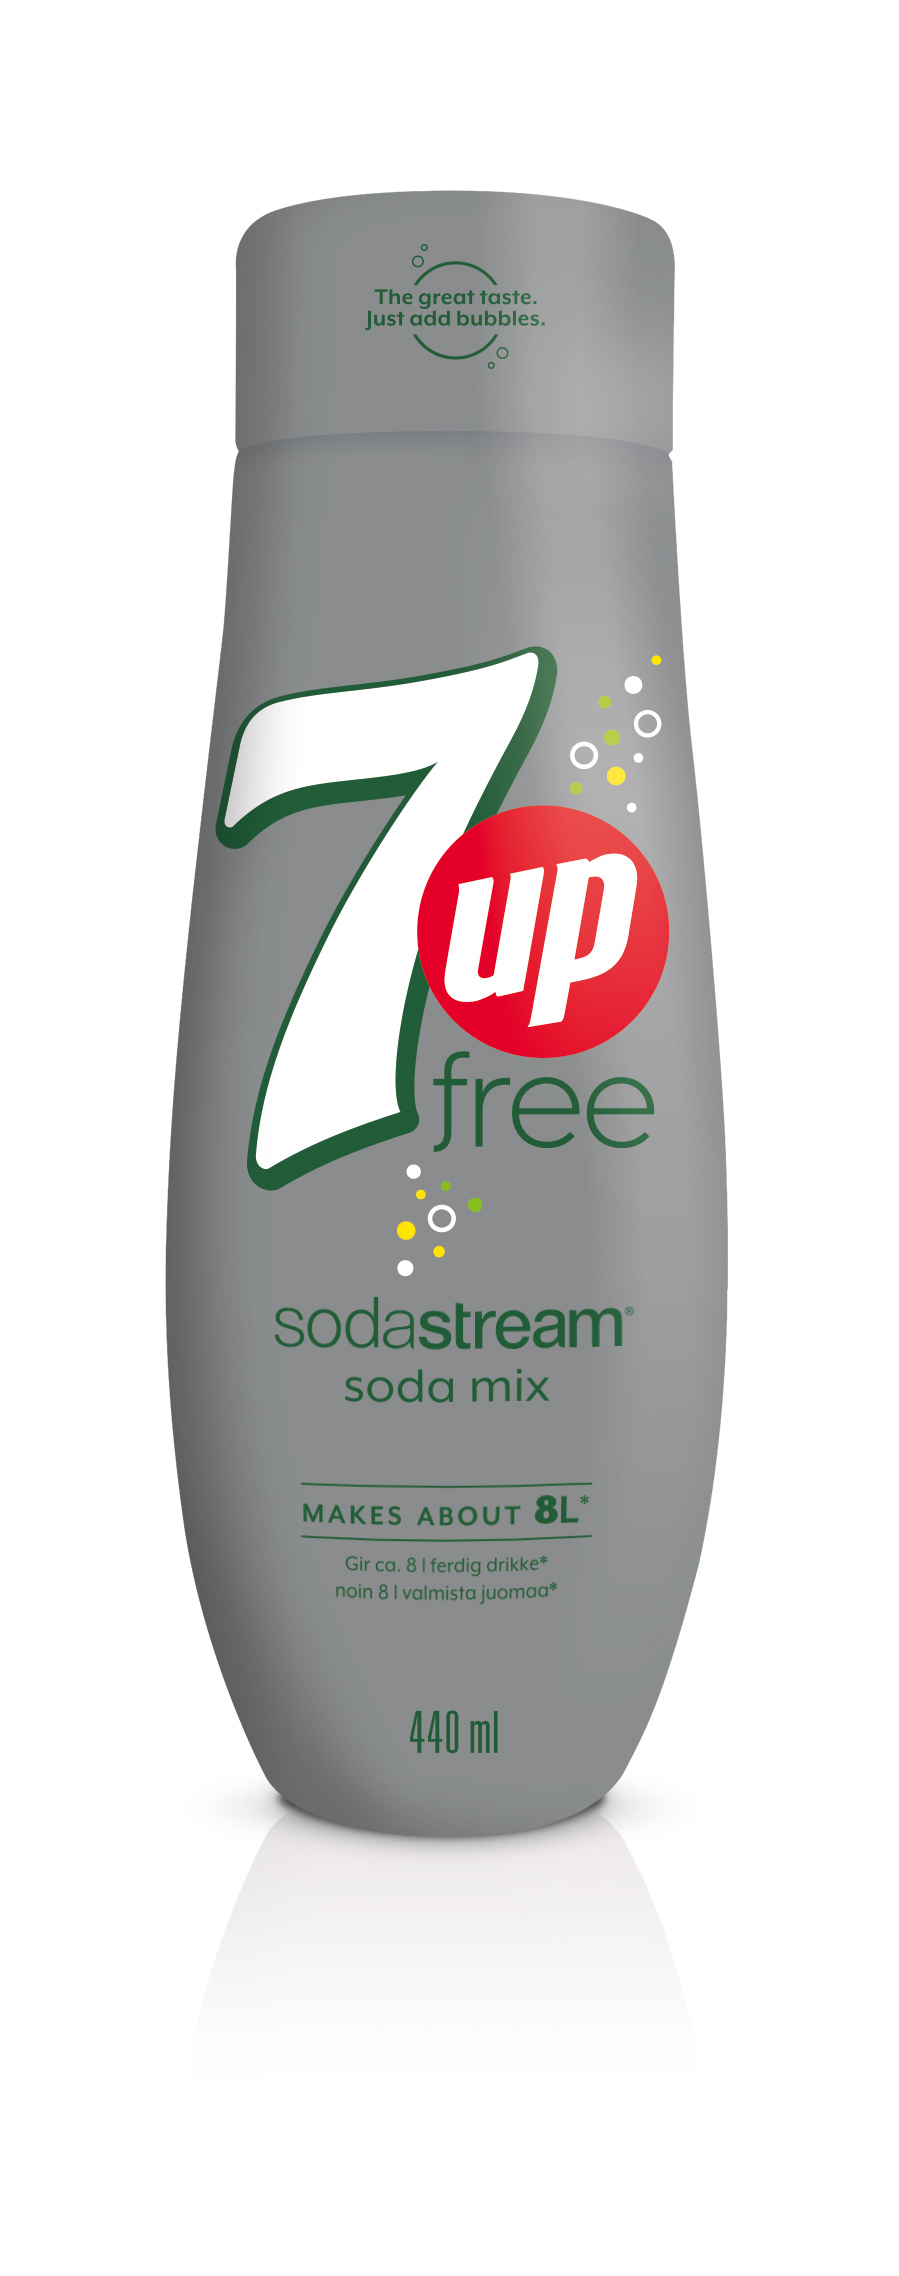 Produkt miniatyrebild SodaStream 7UP Free essens